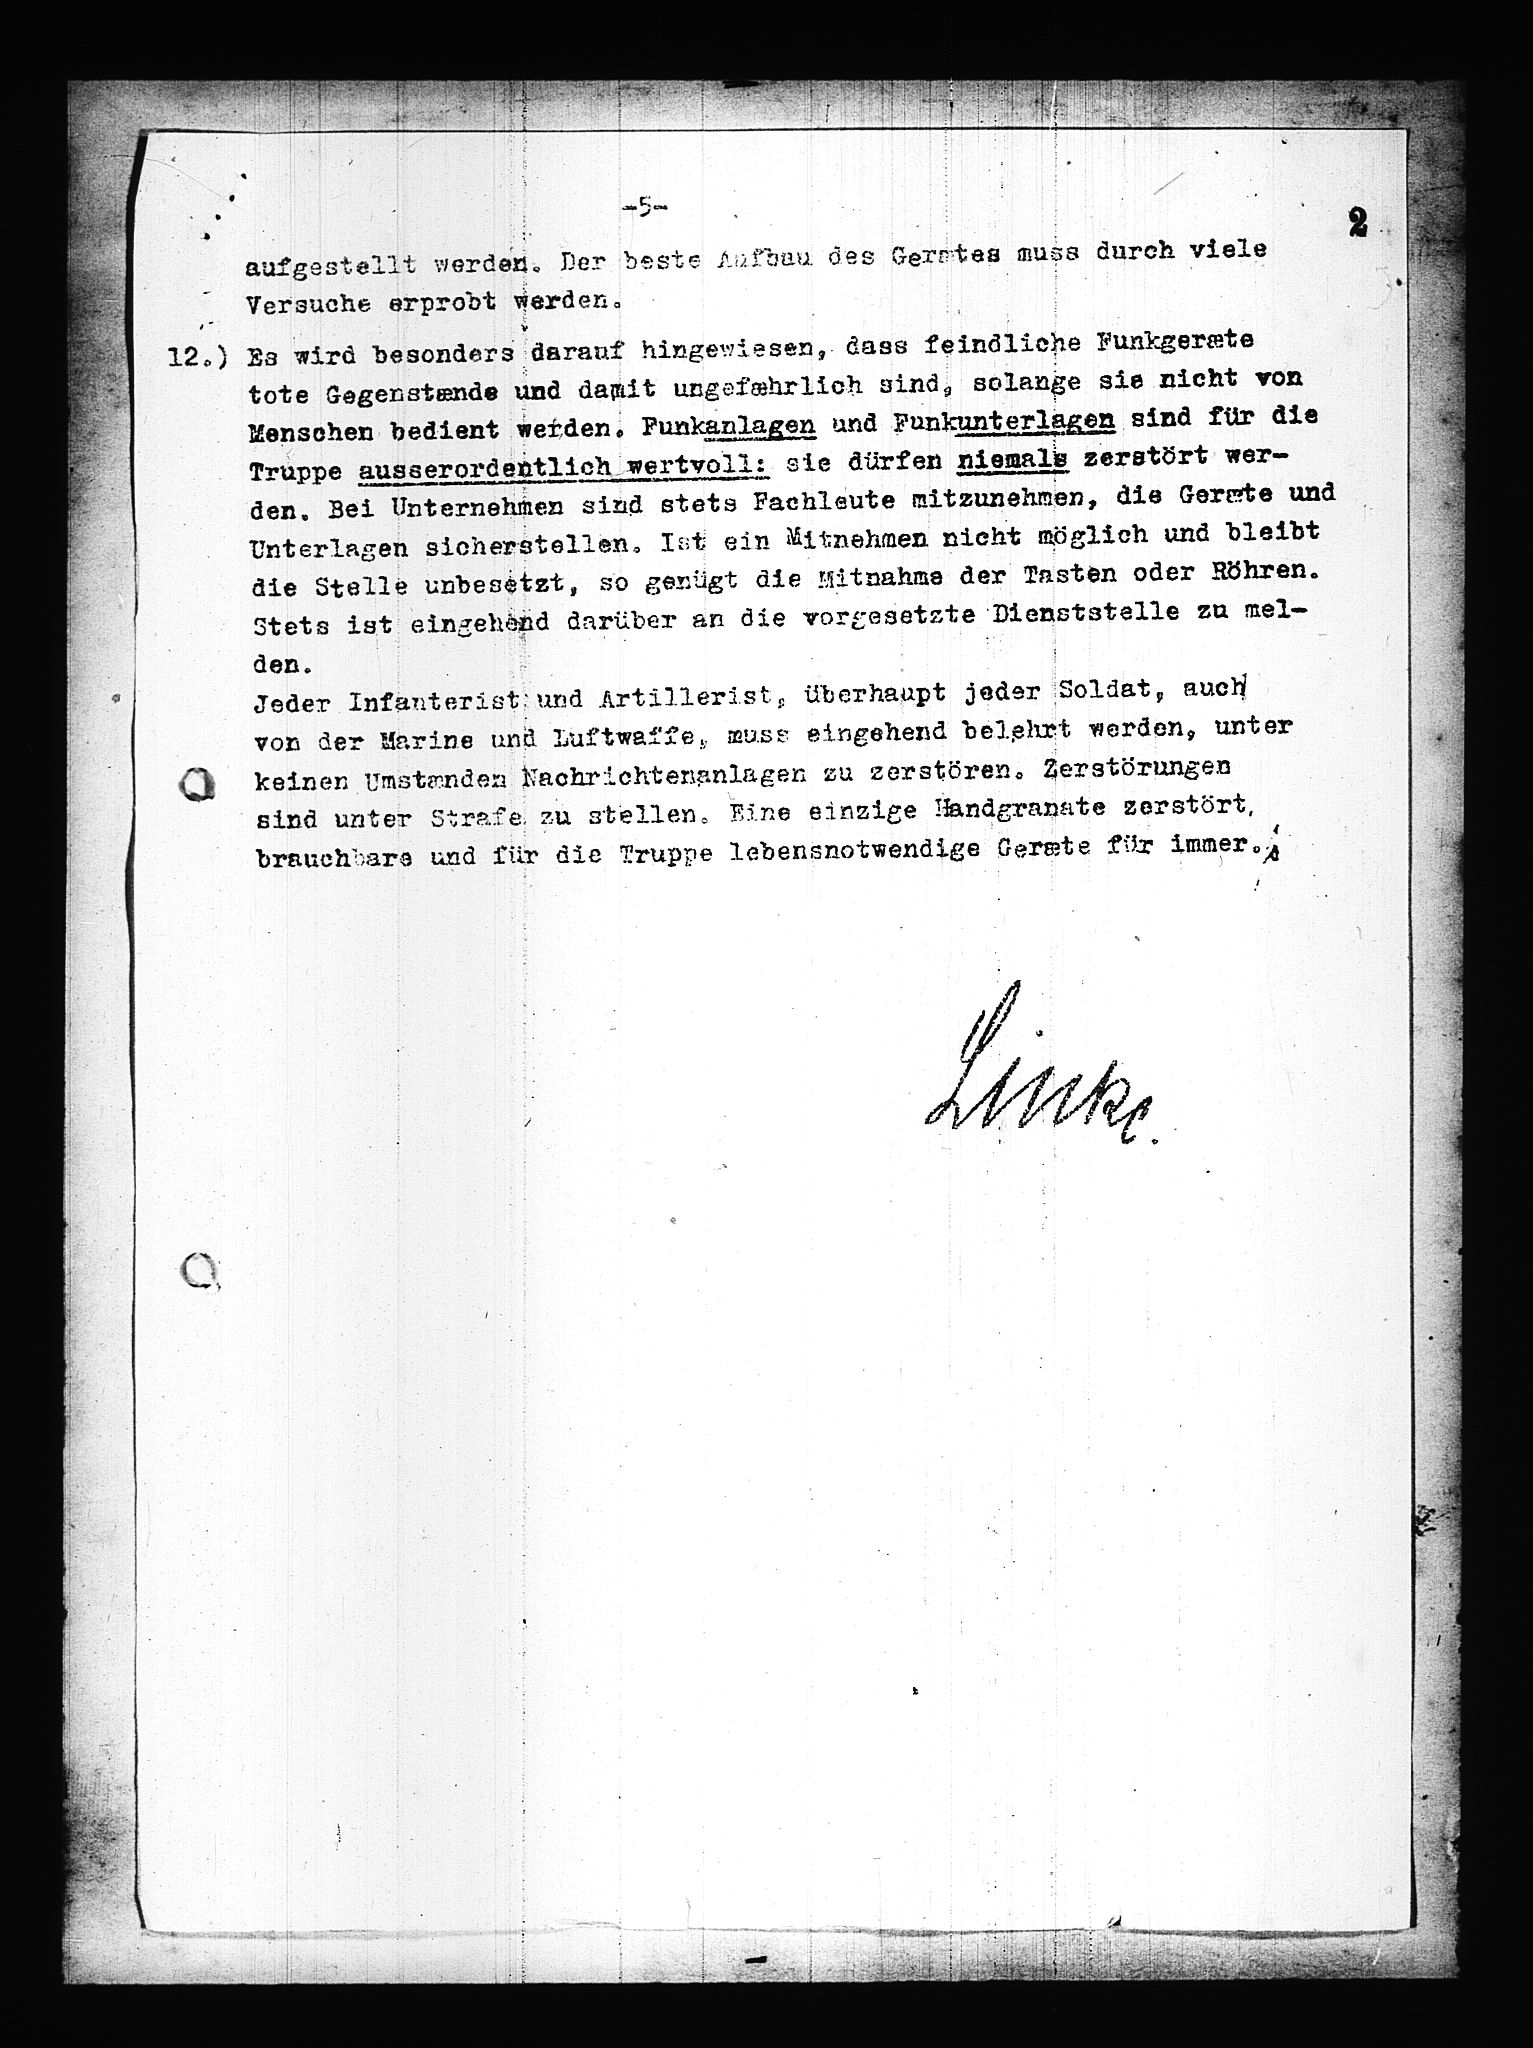 Documents Section, RA/RAFA-2200/V/L0082: Amerikansk mikrofilm "Captured German Documents".
Box No. 721.  FKA jnr. 619/1954., 1940, s. 508